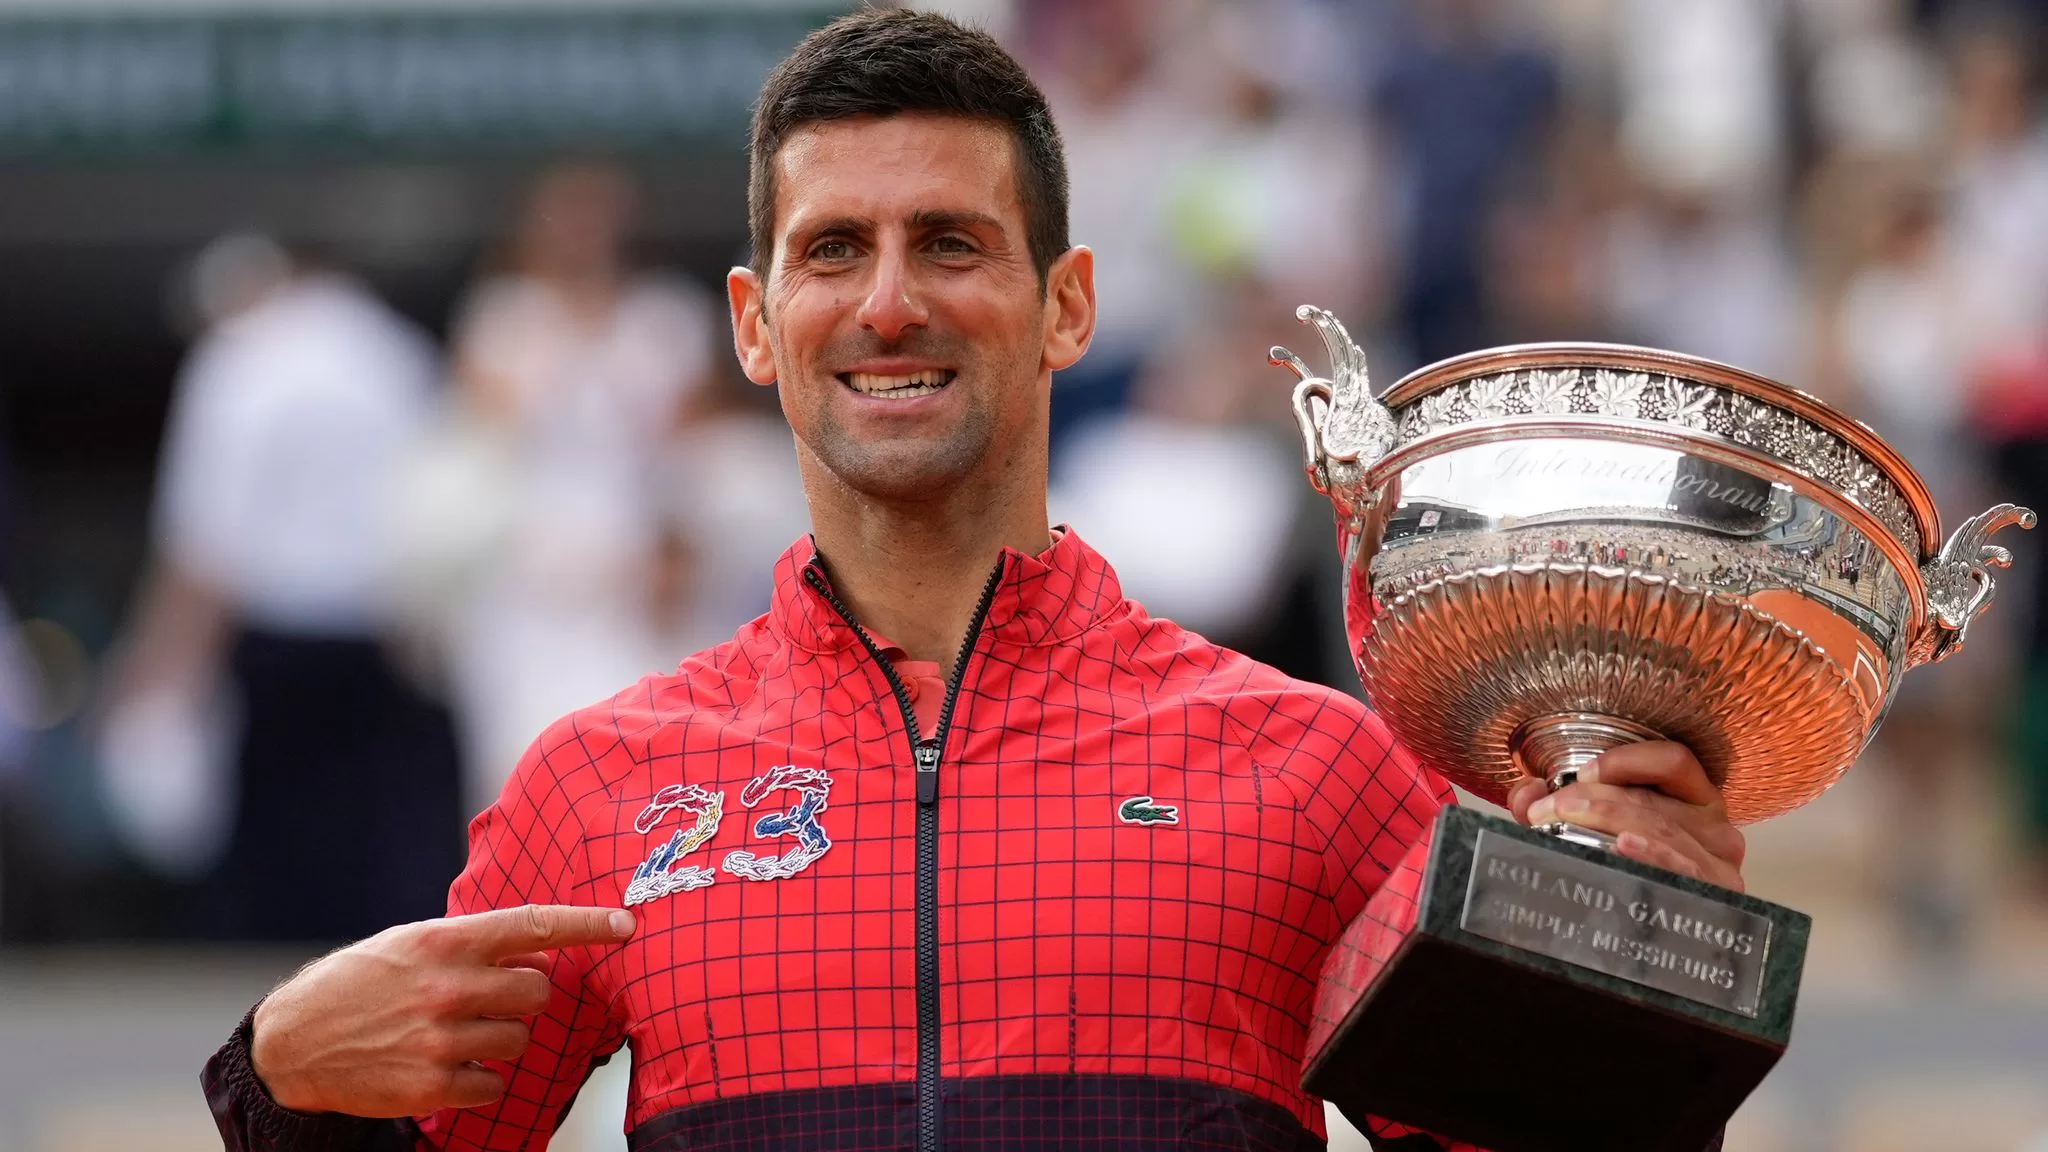 Novak Djokovic: Fun Facts and Winning Stats